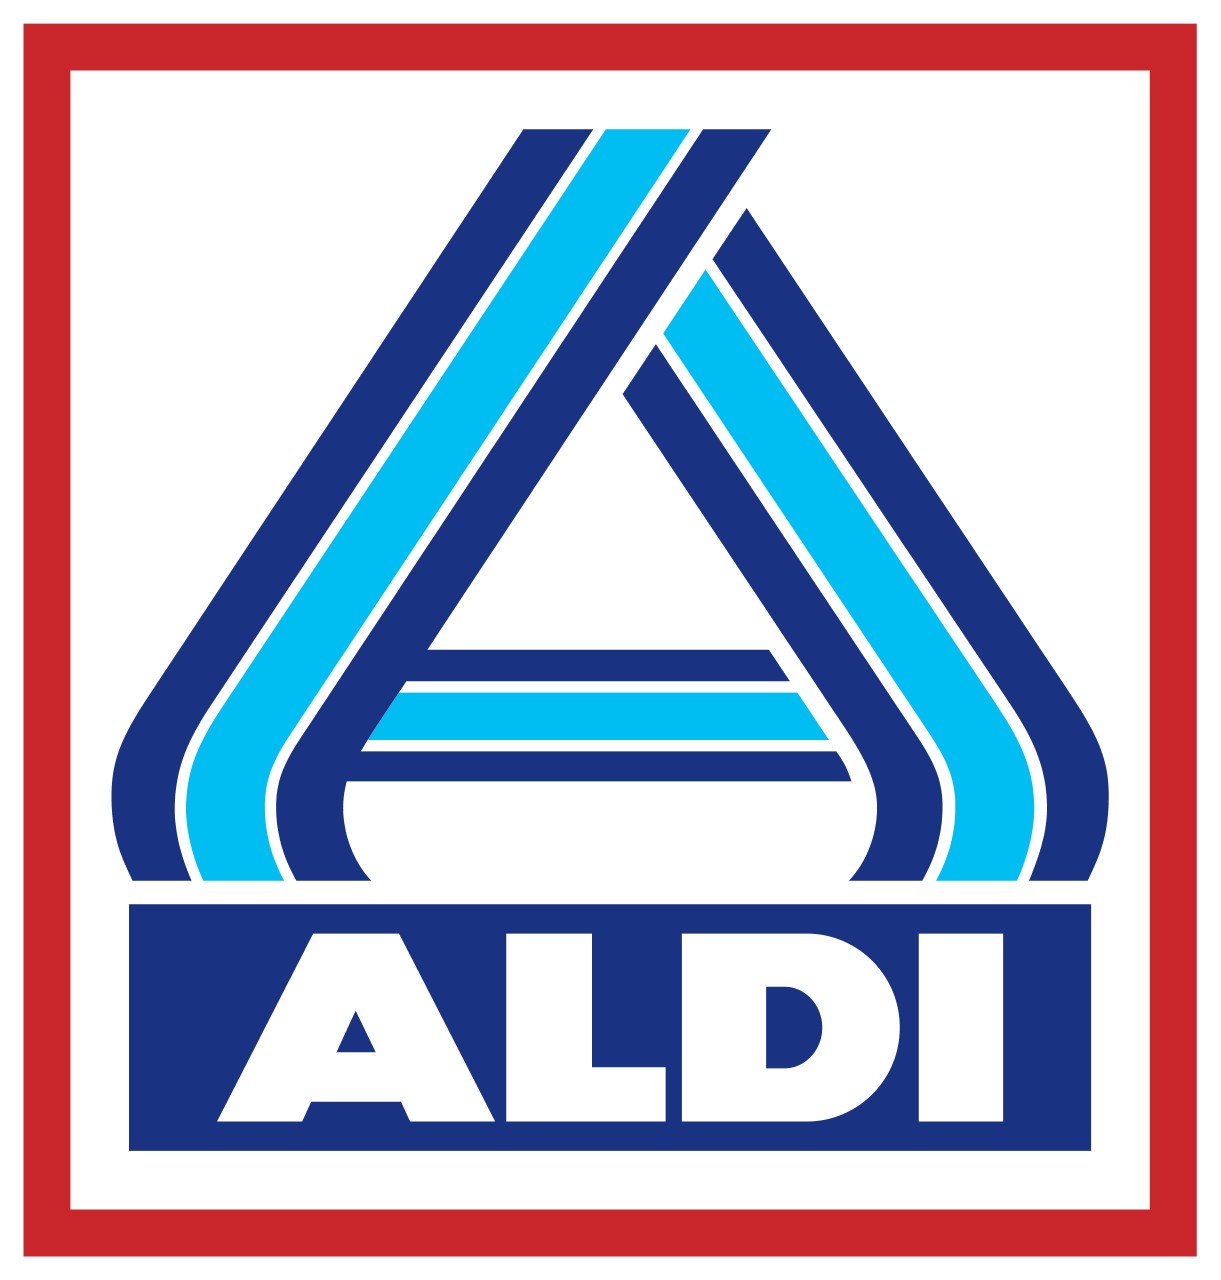 ALDI Nord Logo 2021 1280x1280.jpeg